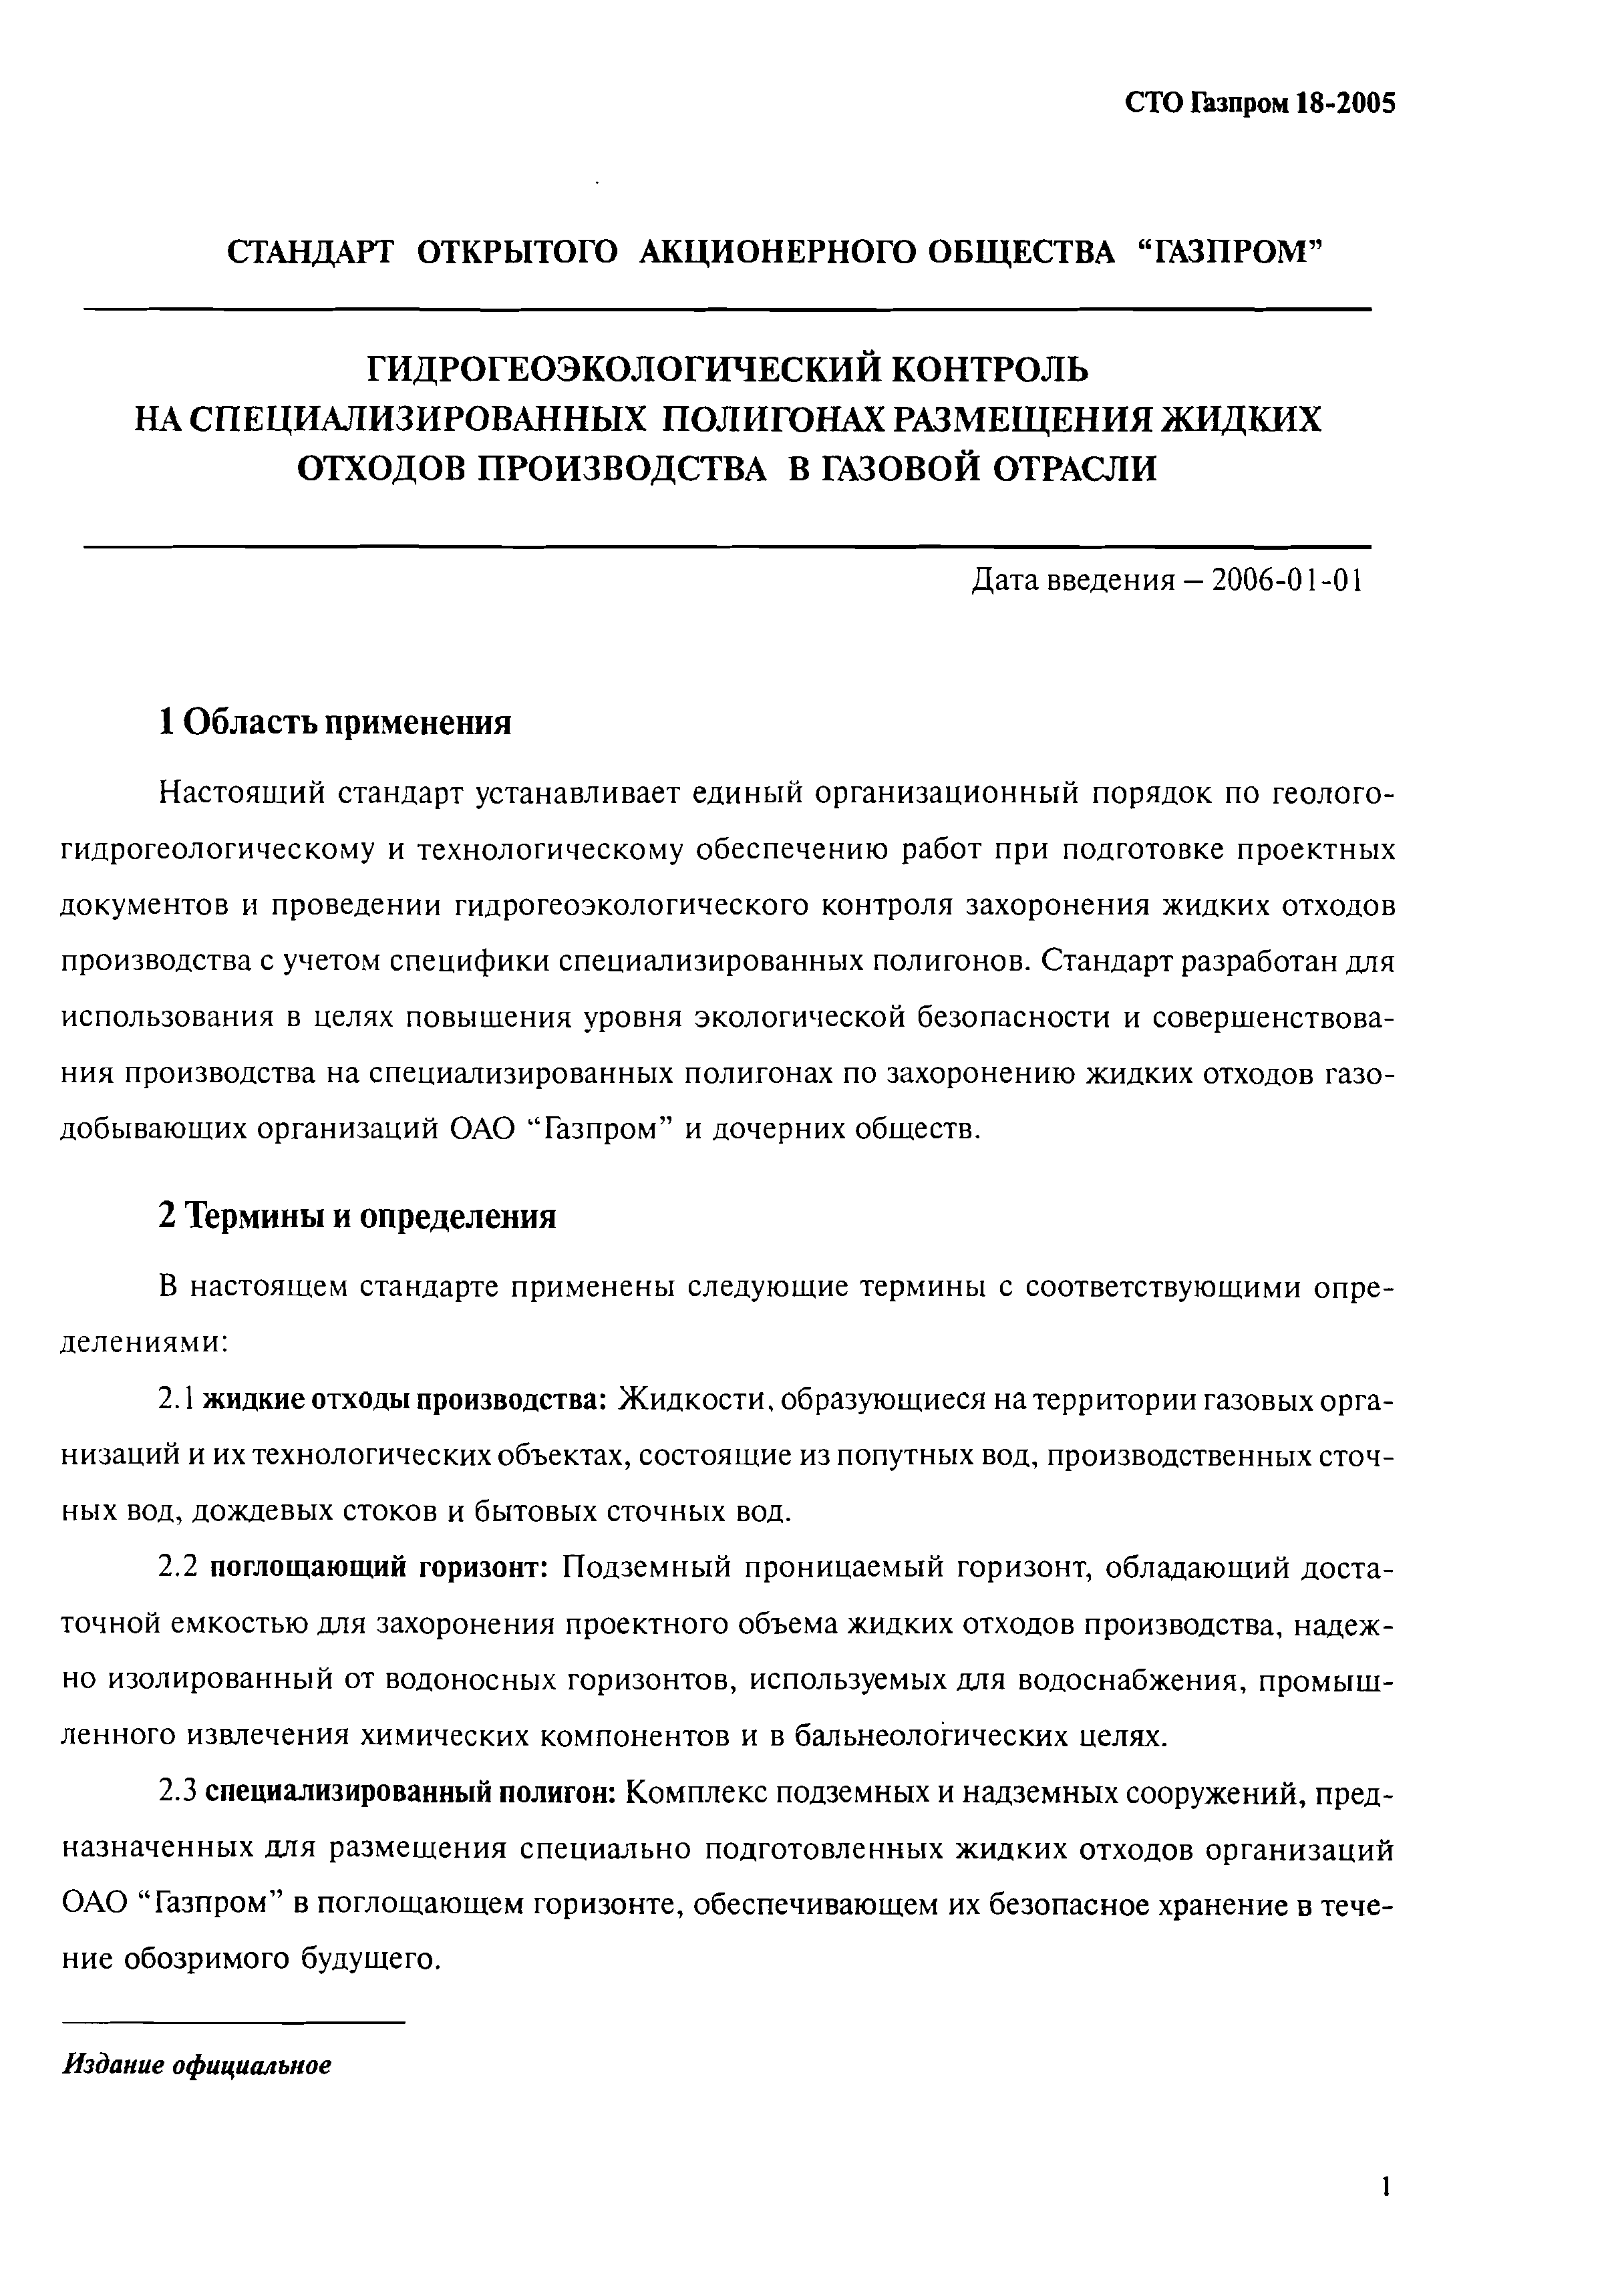 СТО Газпром 18-2005